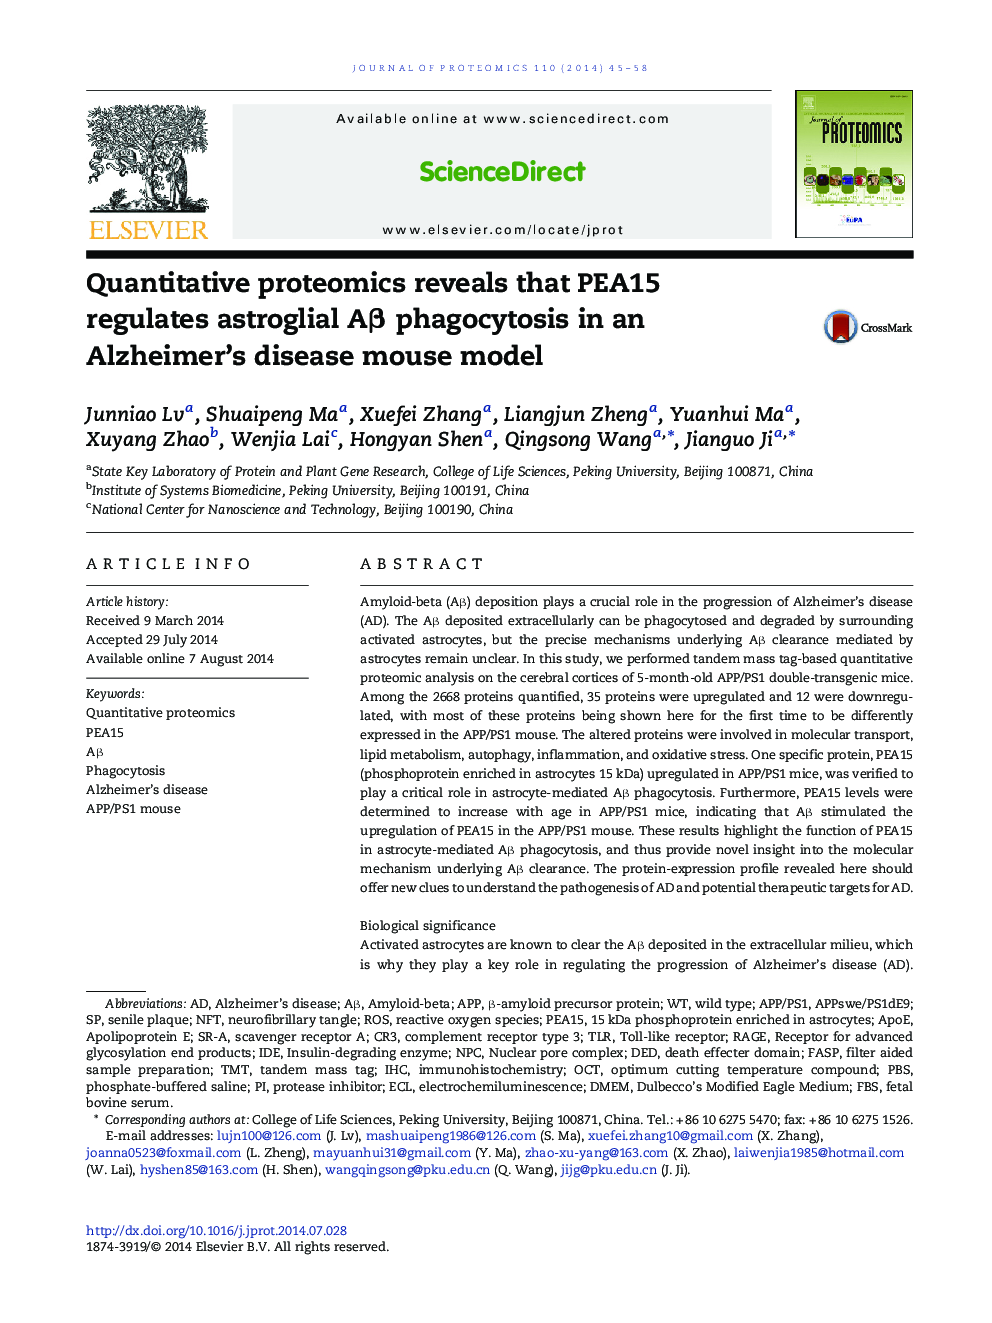 Quantitative proteomics reveals that PEA15 regulates astroglial Aβ phagocytosis in an Alzheimer's disease mouse model